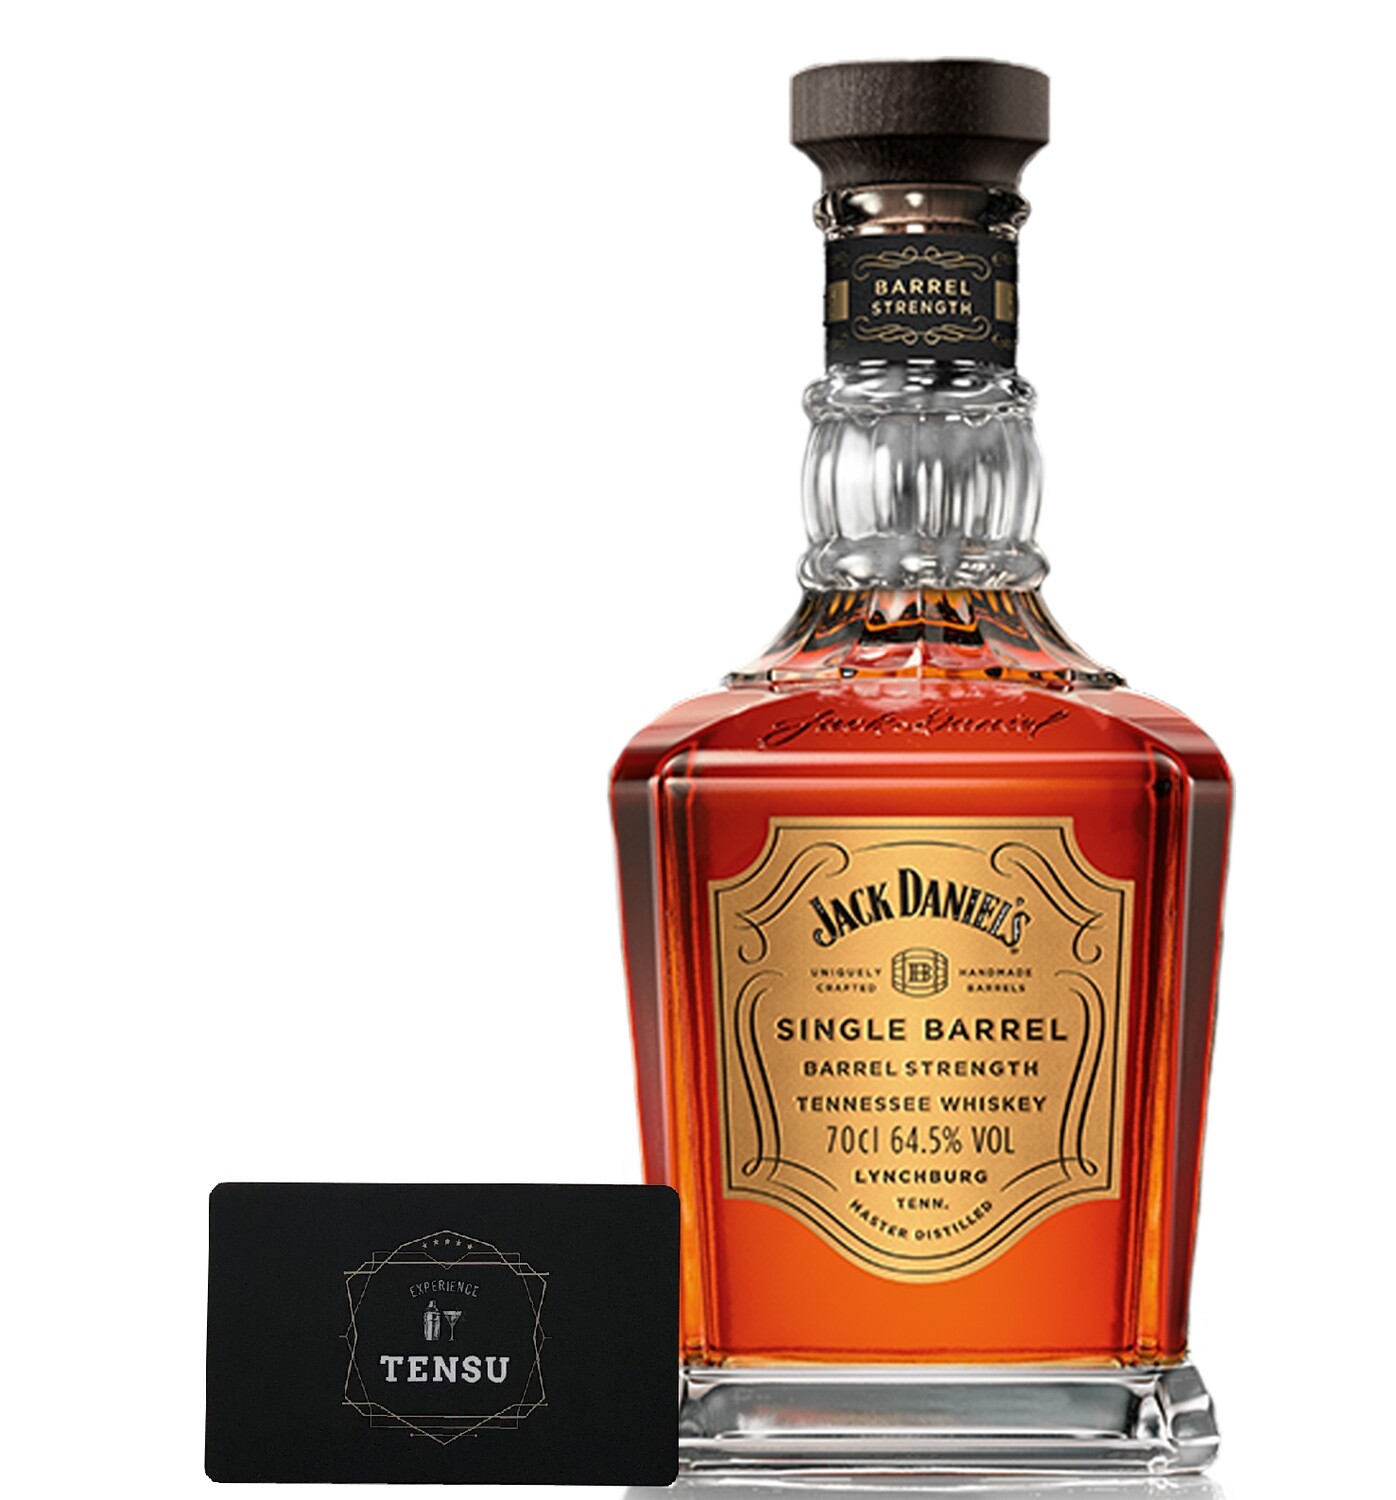 Jack Daniel's Single Barrel (Barrel Strength)